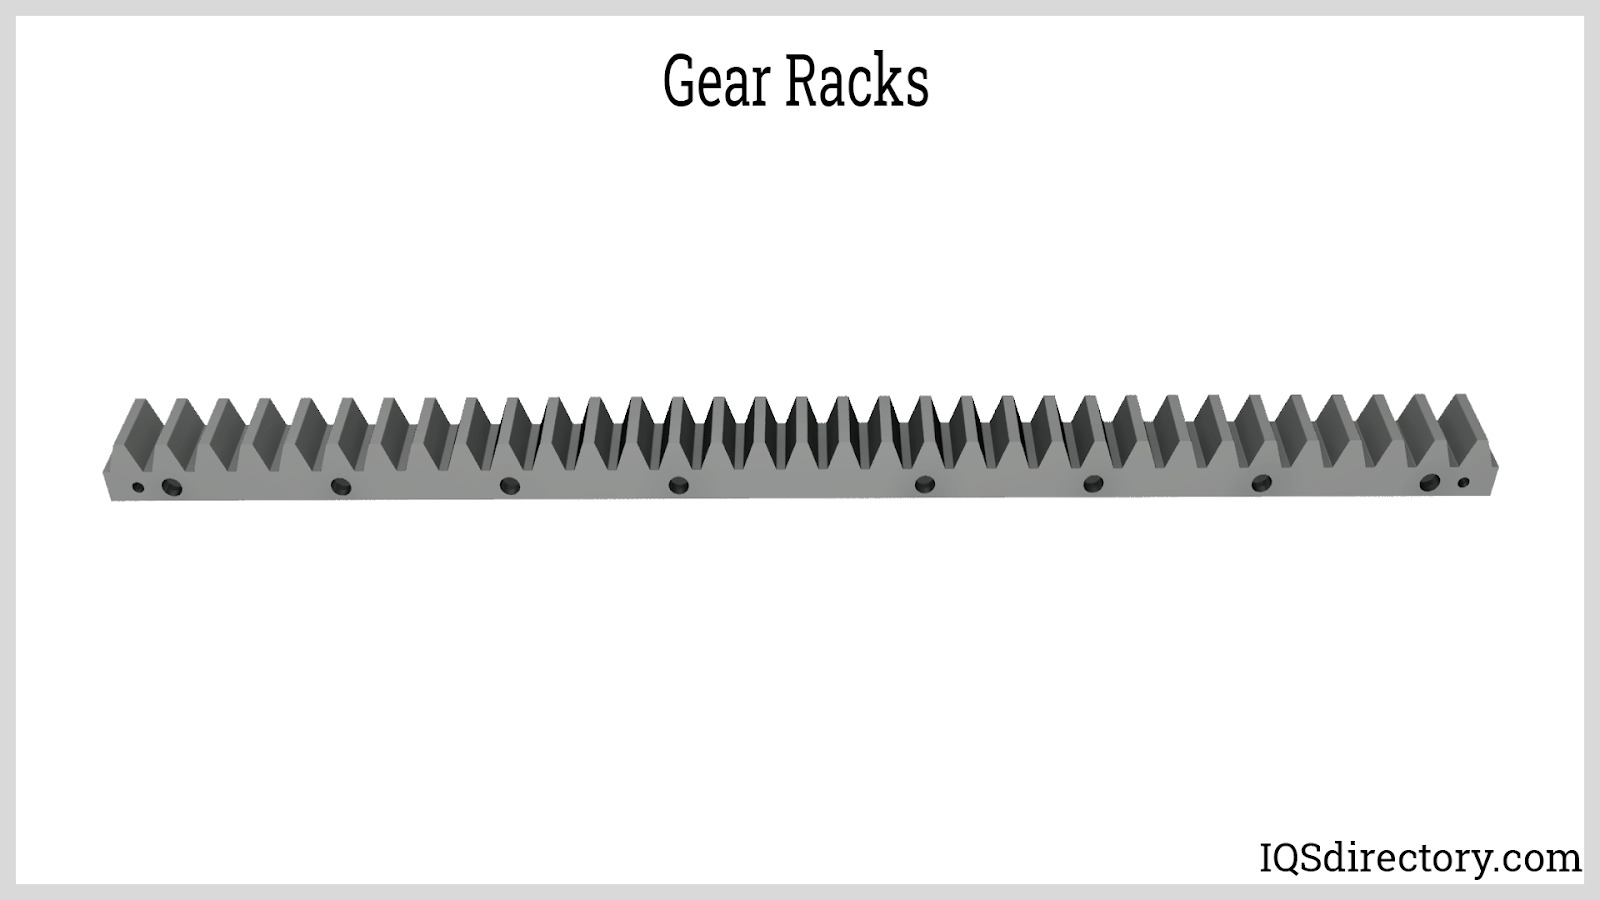 Gear Racks